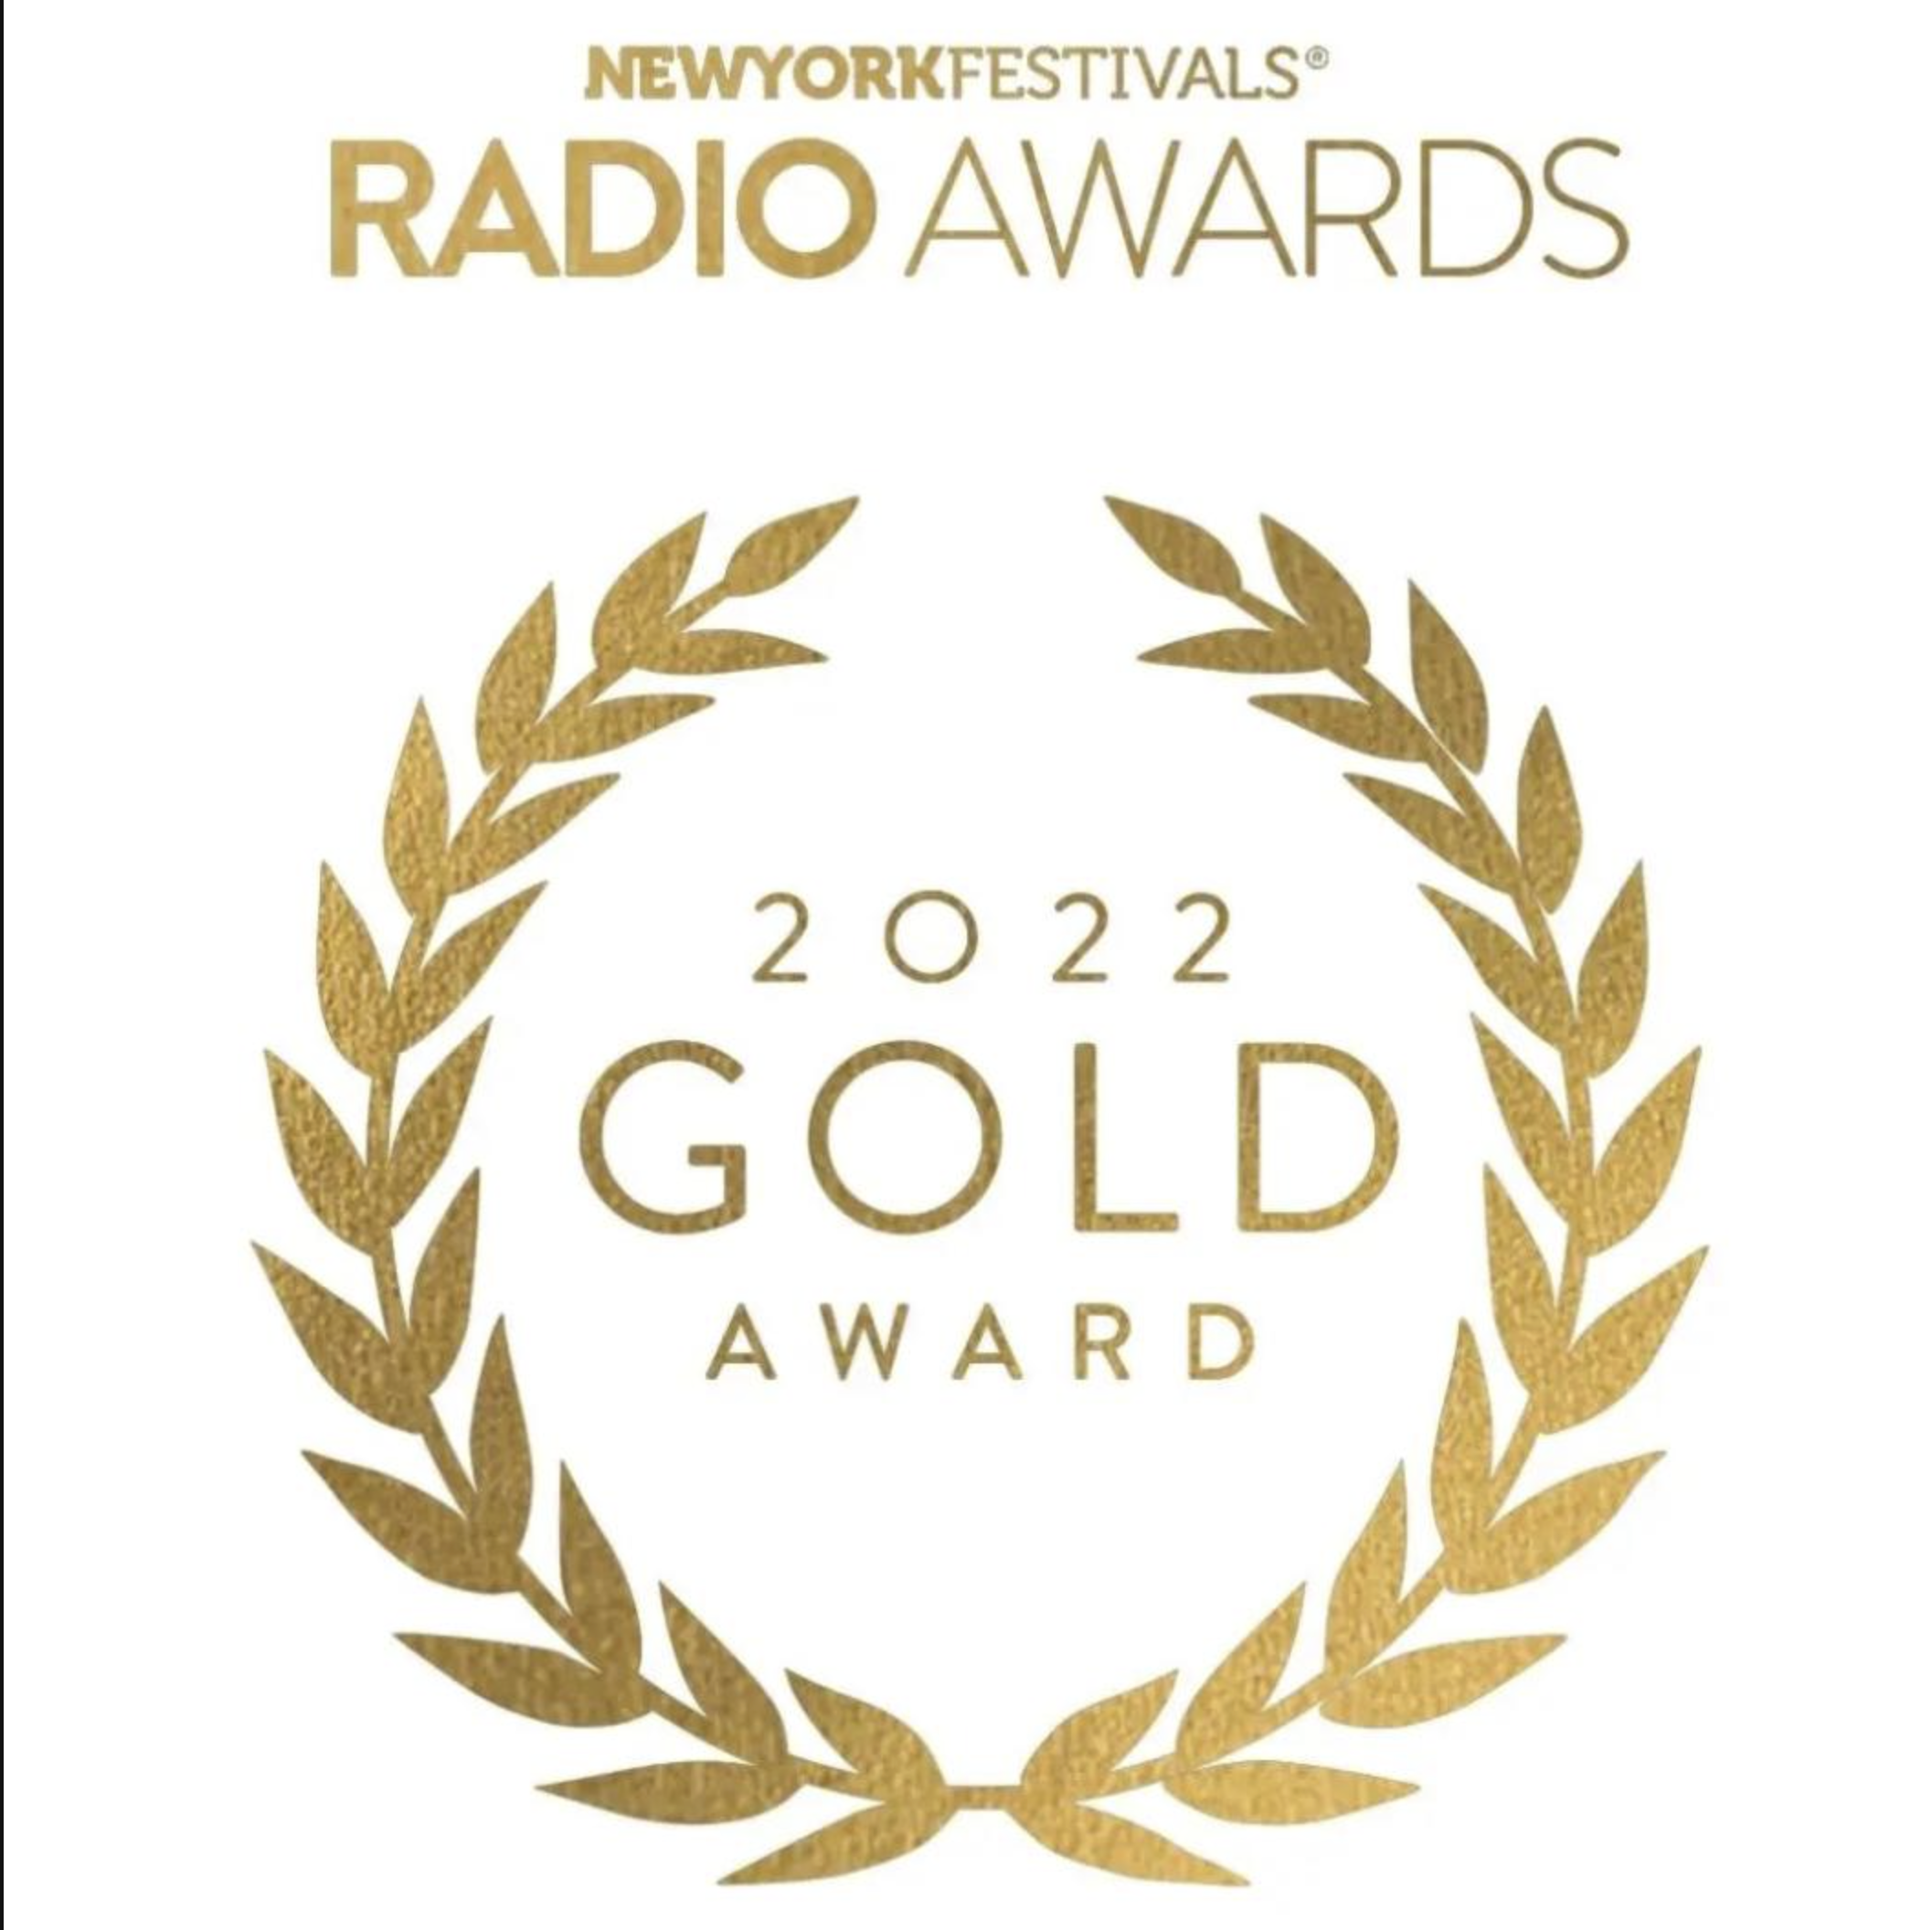 Sounds of the Moana has won Gold (the highest category award) at the prestigious New York Festivals Radio Awards (NYFRA).